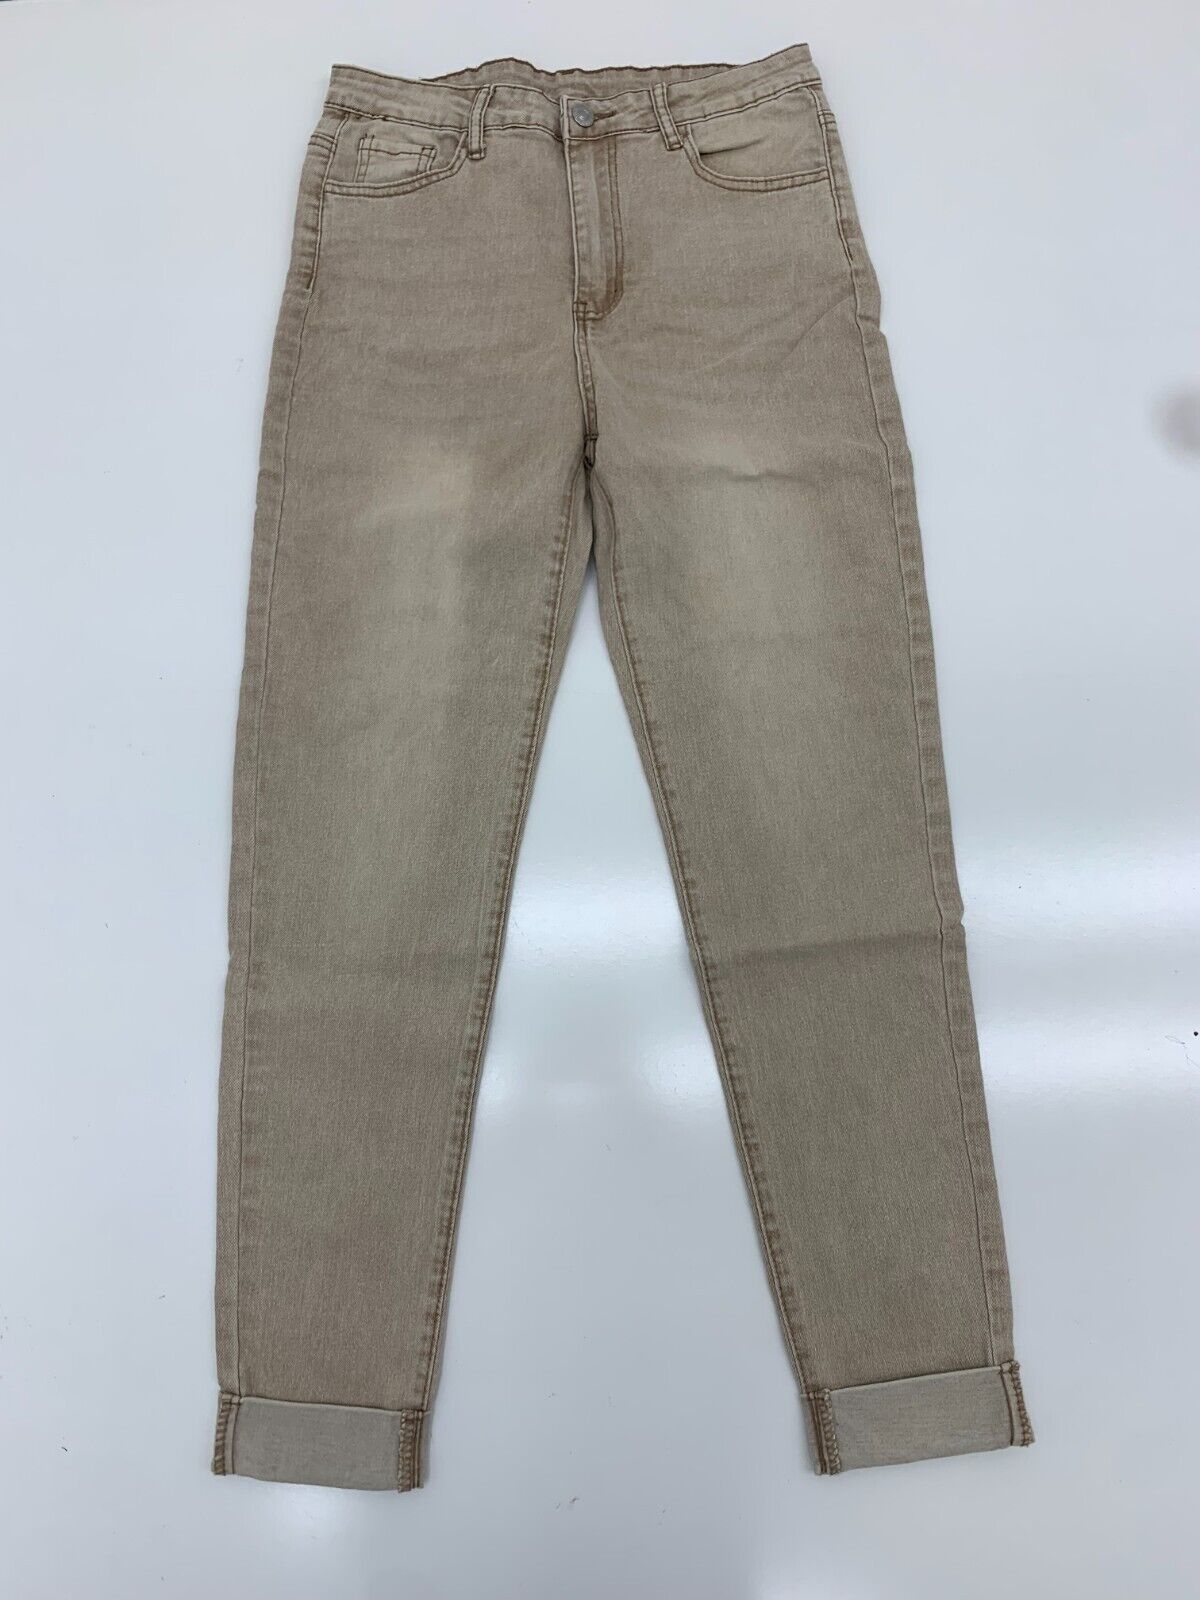 NEW RSQ Jeans Tan Brown Manhattan High Rise Size 7/28 - beyond